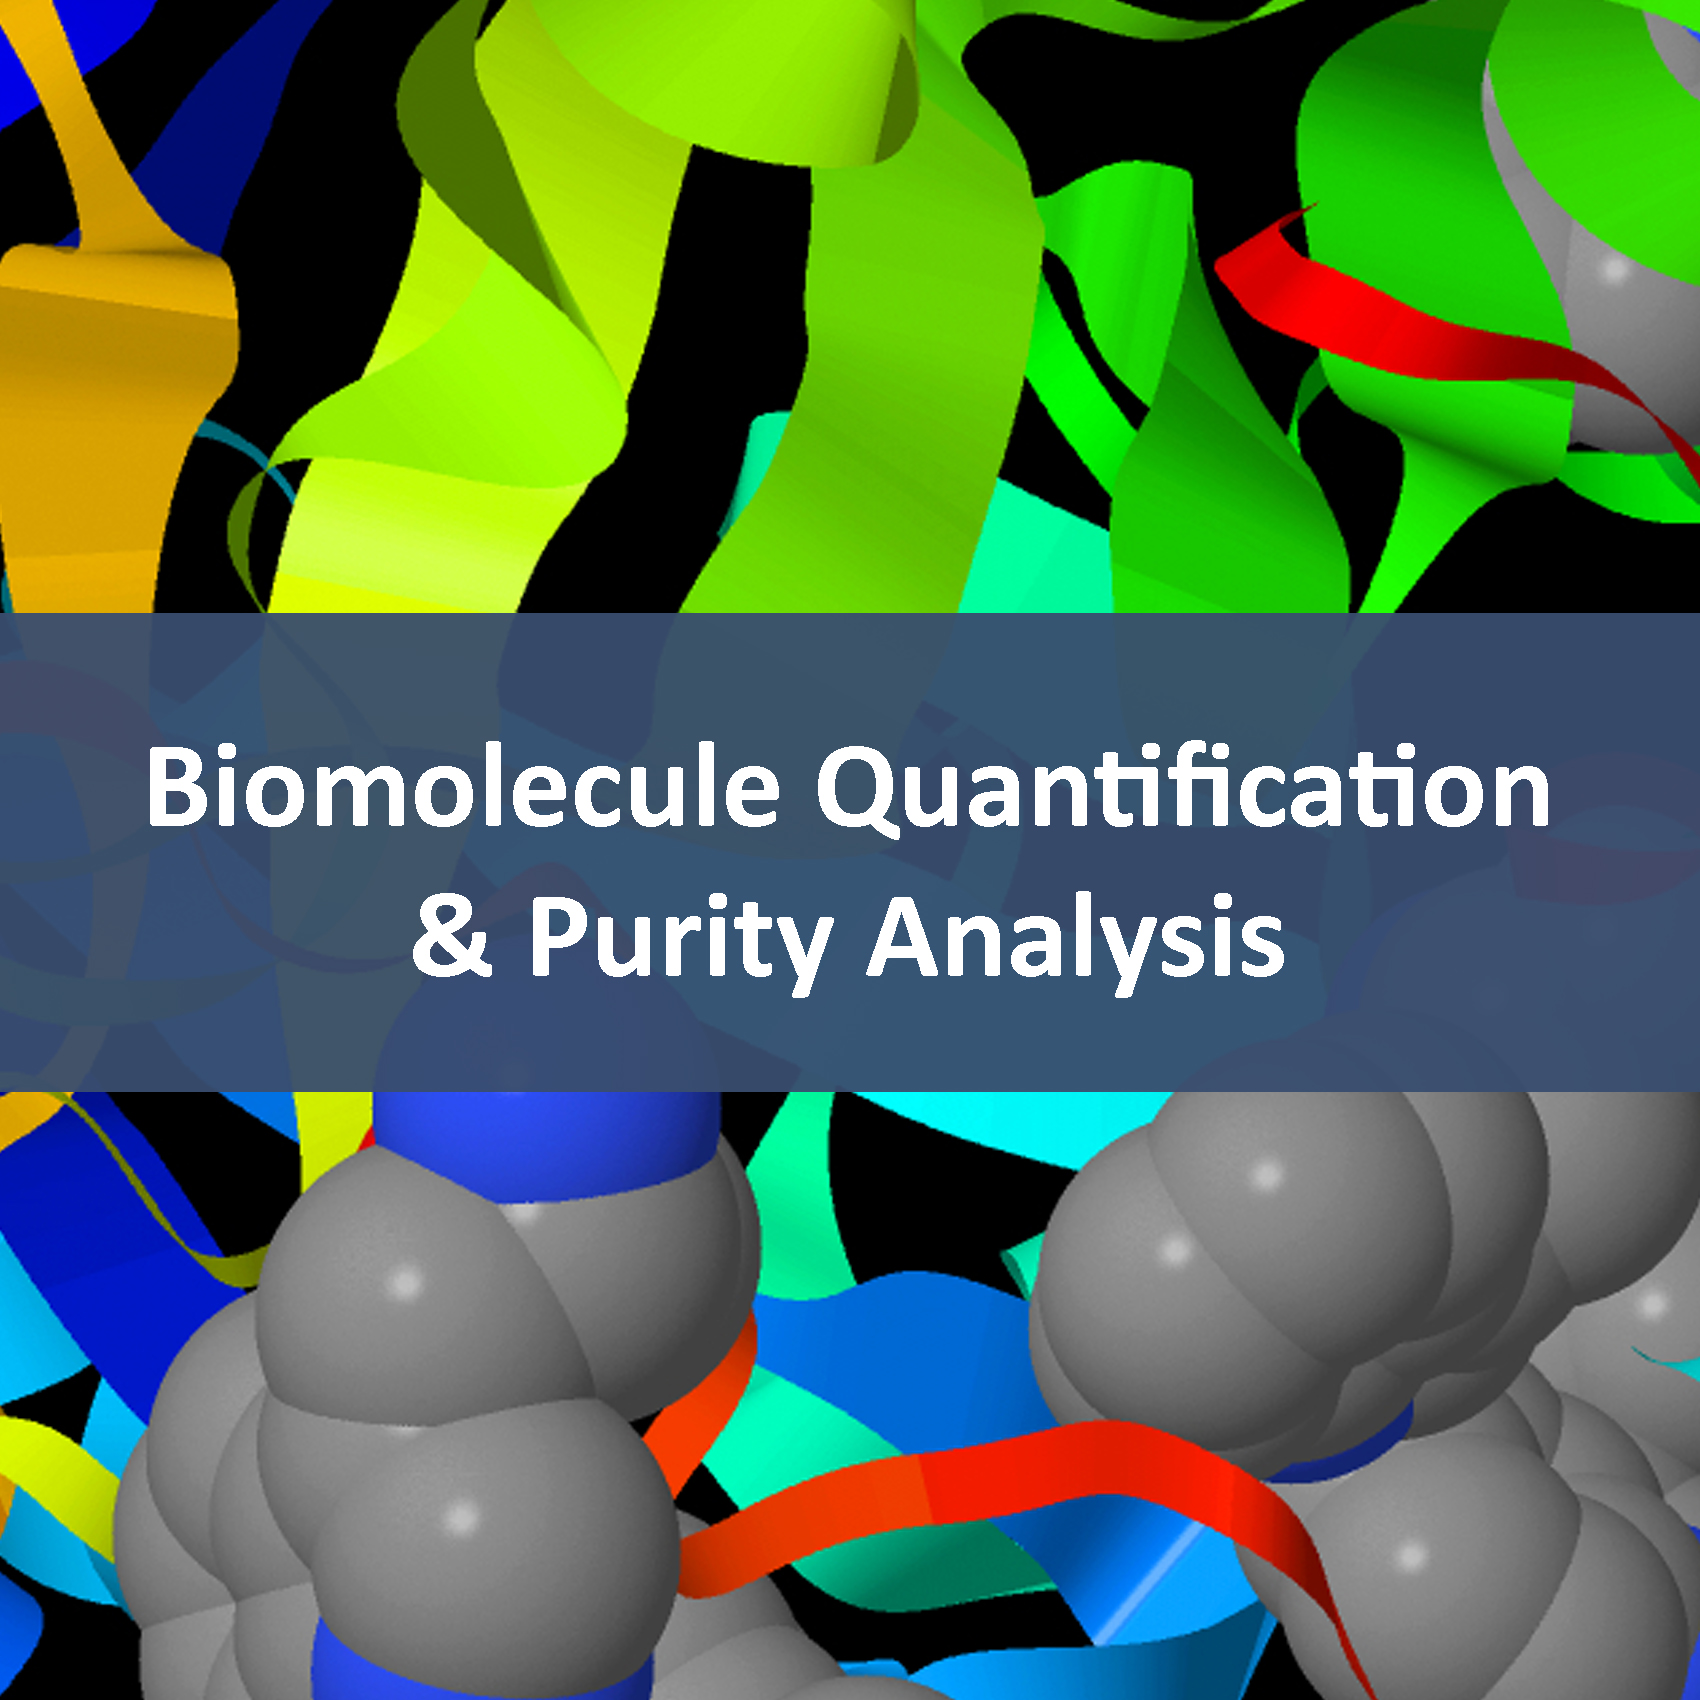 Biomolecule Quantification & Purity Analysis